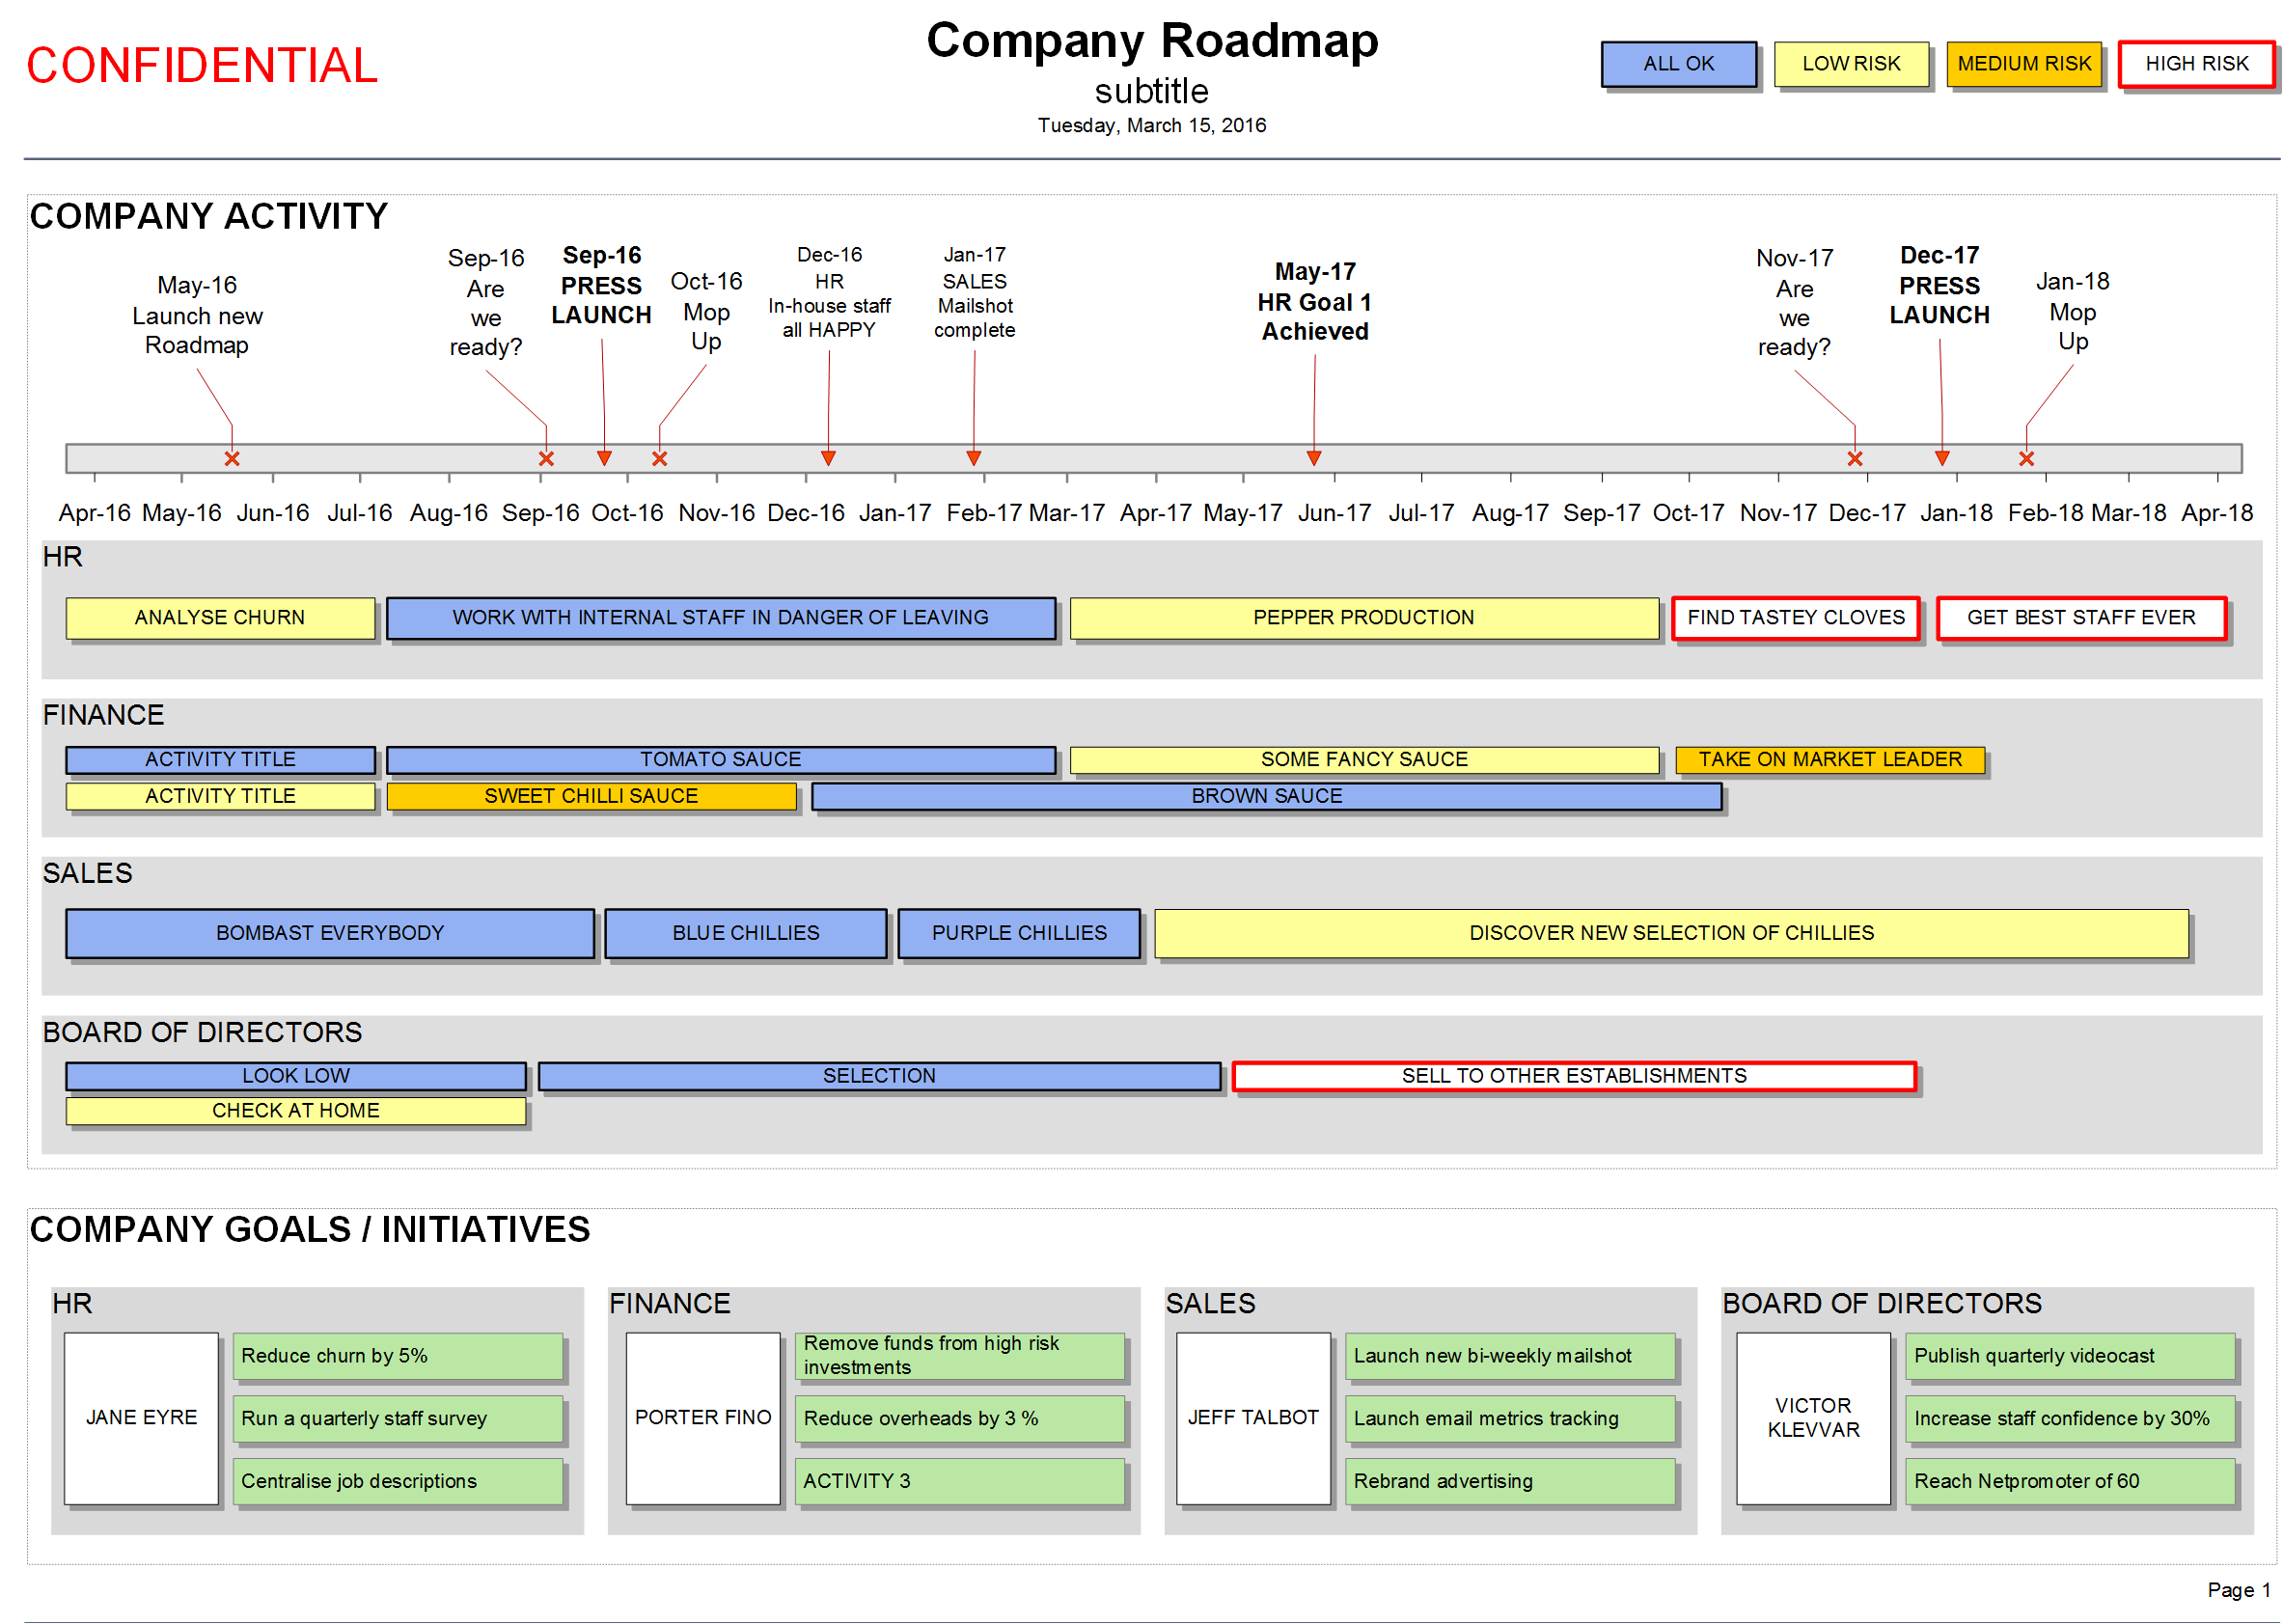 Company Roadmap Template